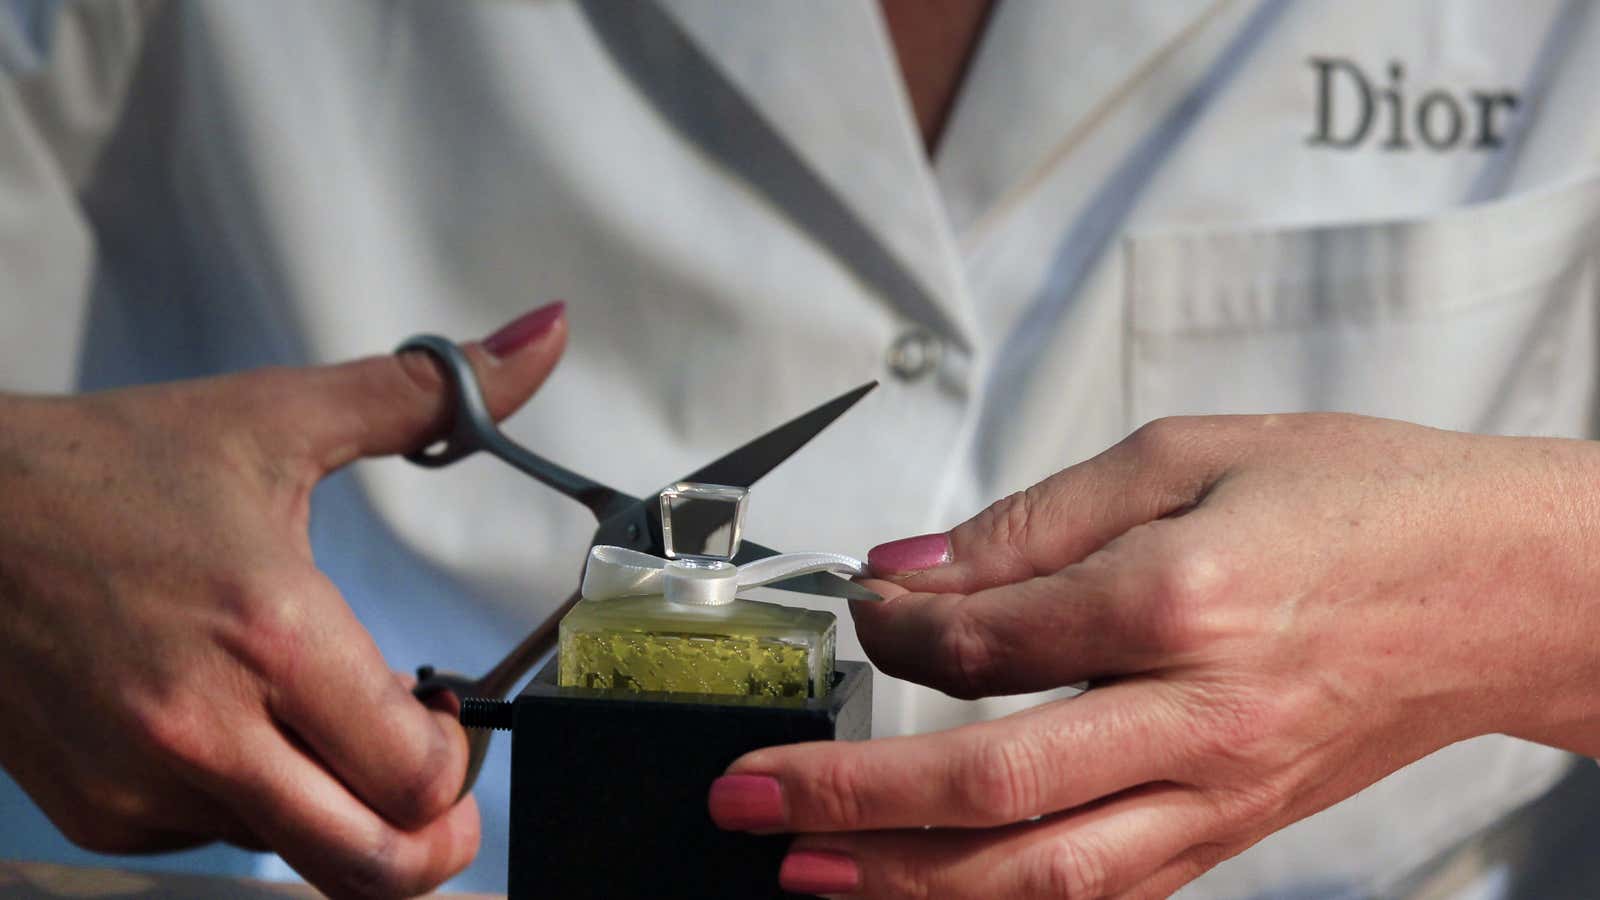 Perfume giant LVMH to make hand sanitiser for French hospitals